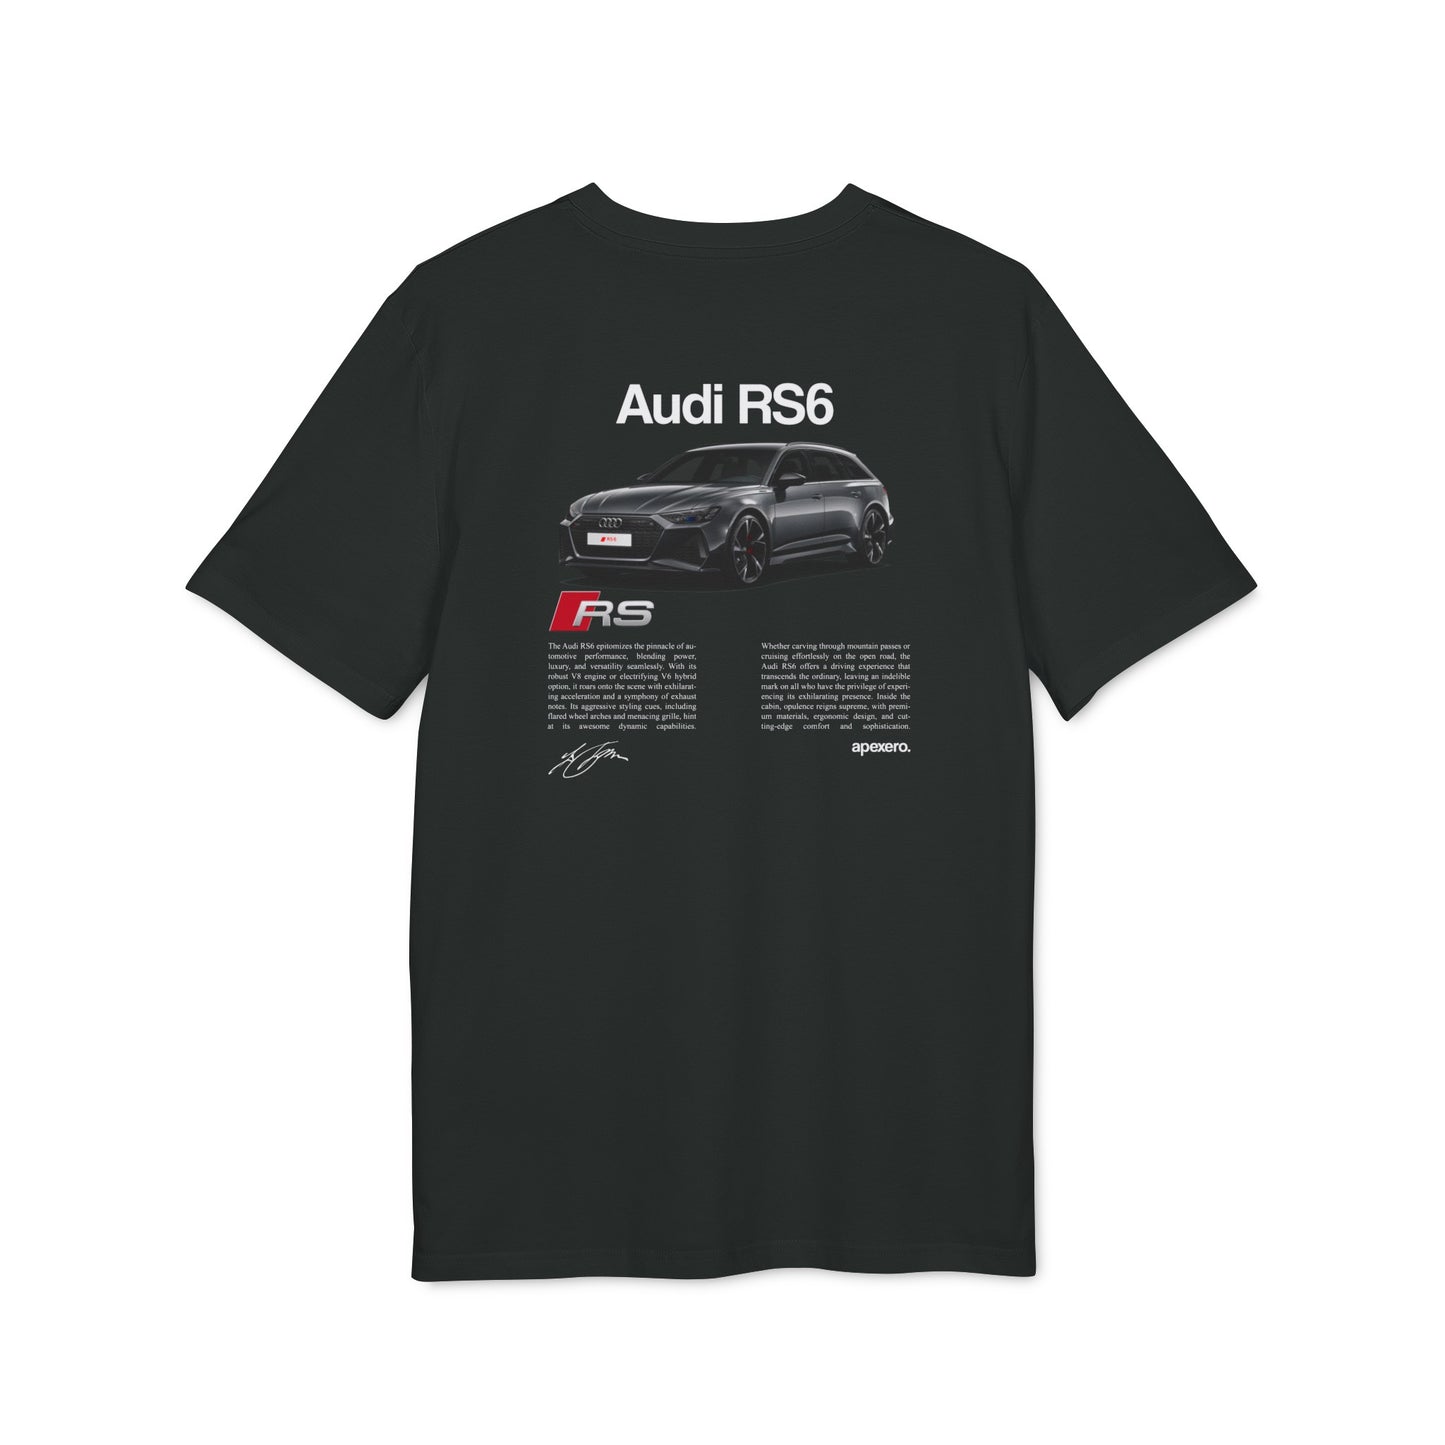 Audi RS6 T-shirt